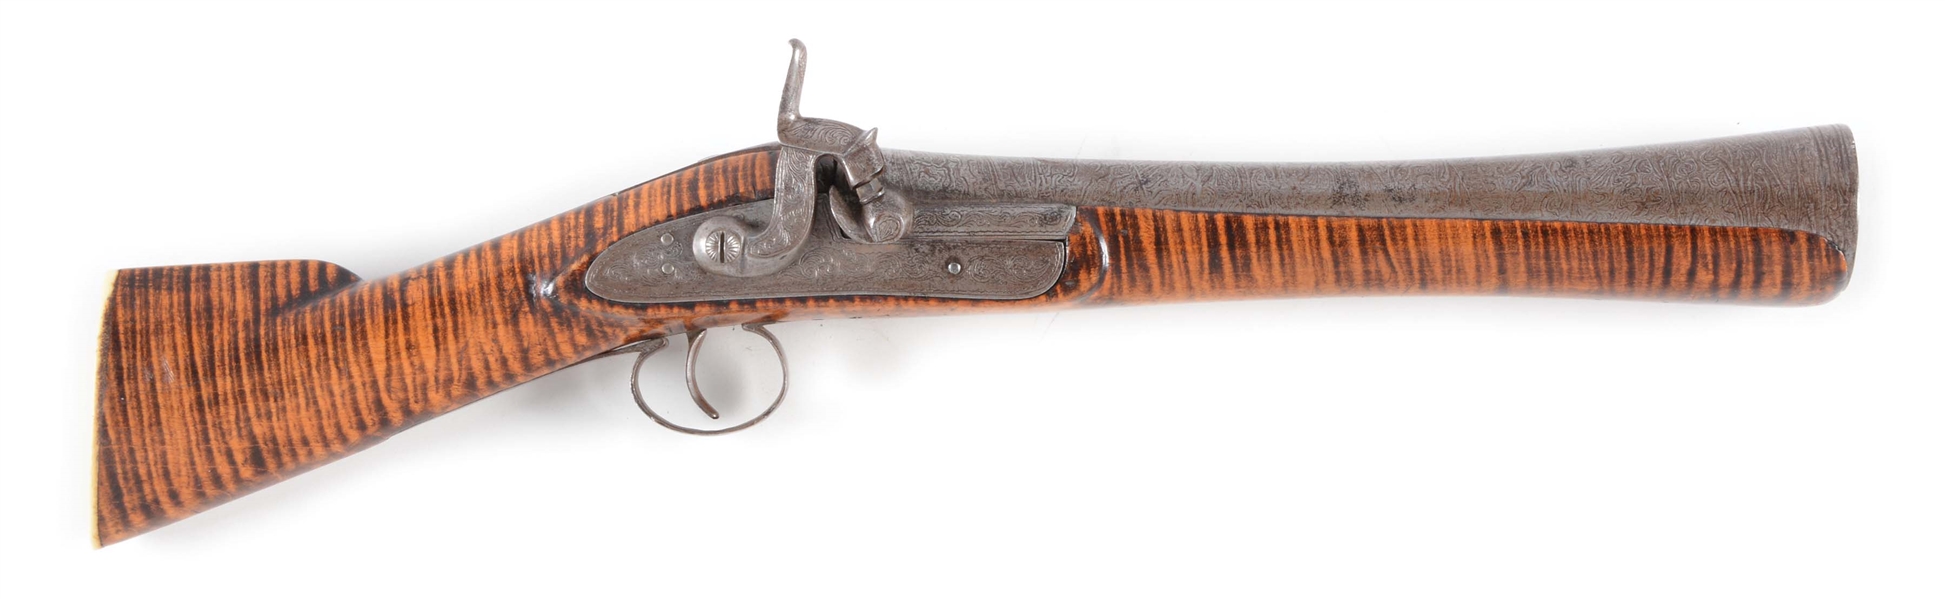 (A) A MID 19TH CENTURY OTTOMAN PERCUSSION GUN STOCK BLUNDERBUSS PISTOL.